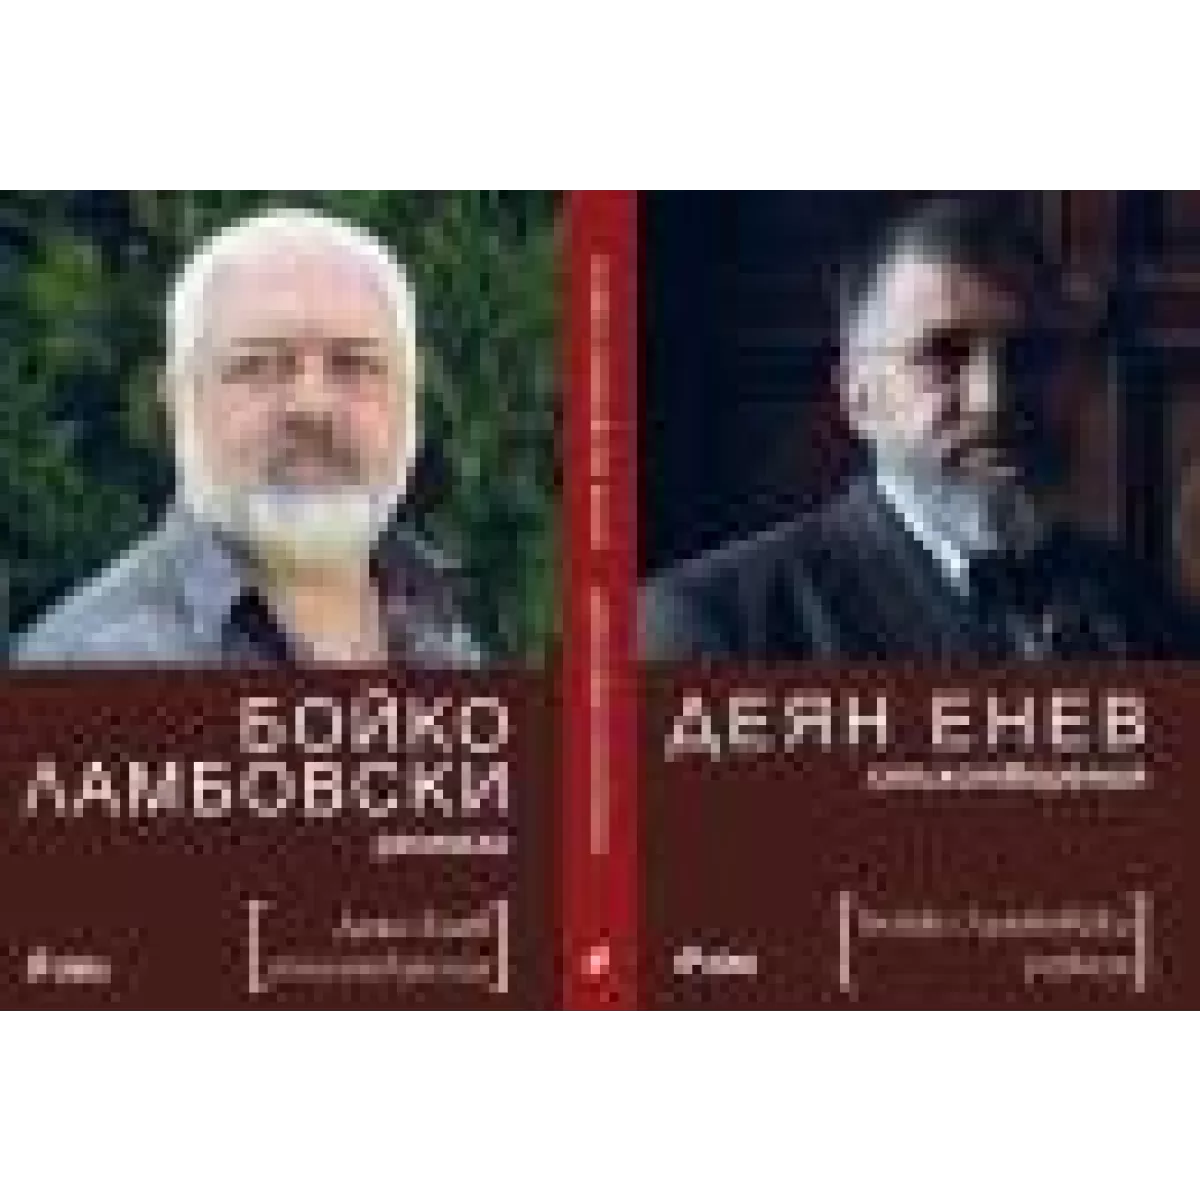 Бойко Ламбовски – разкази/Деян Енев – поезия